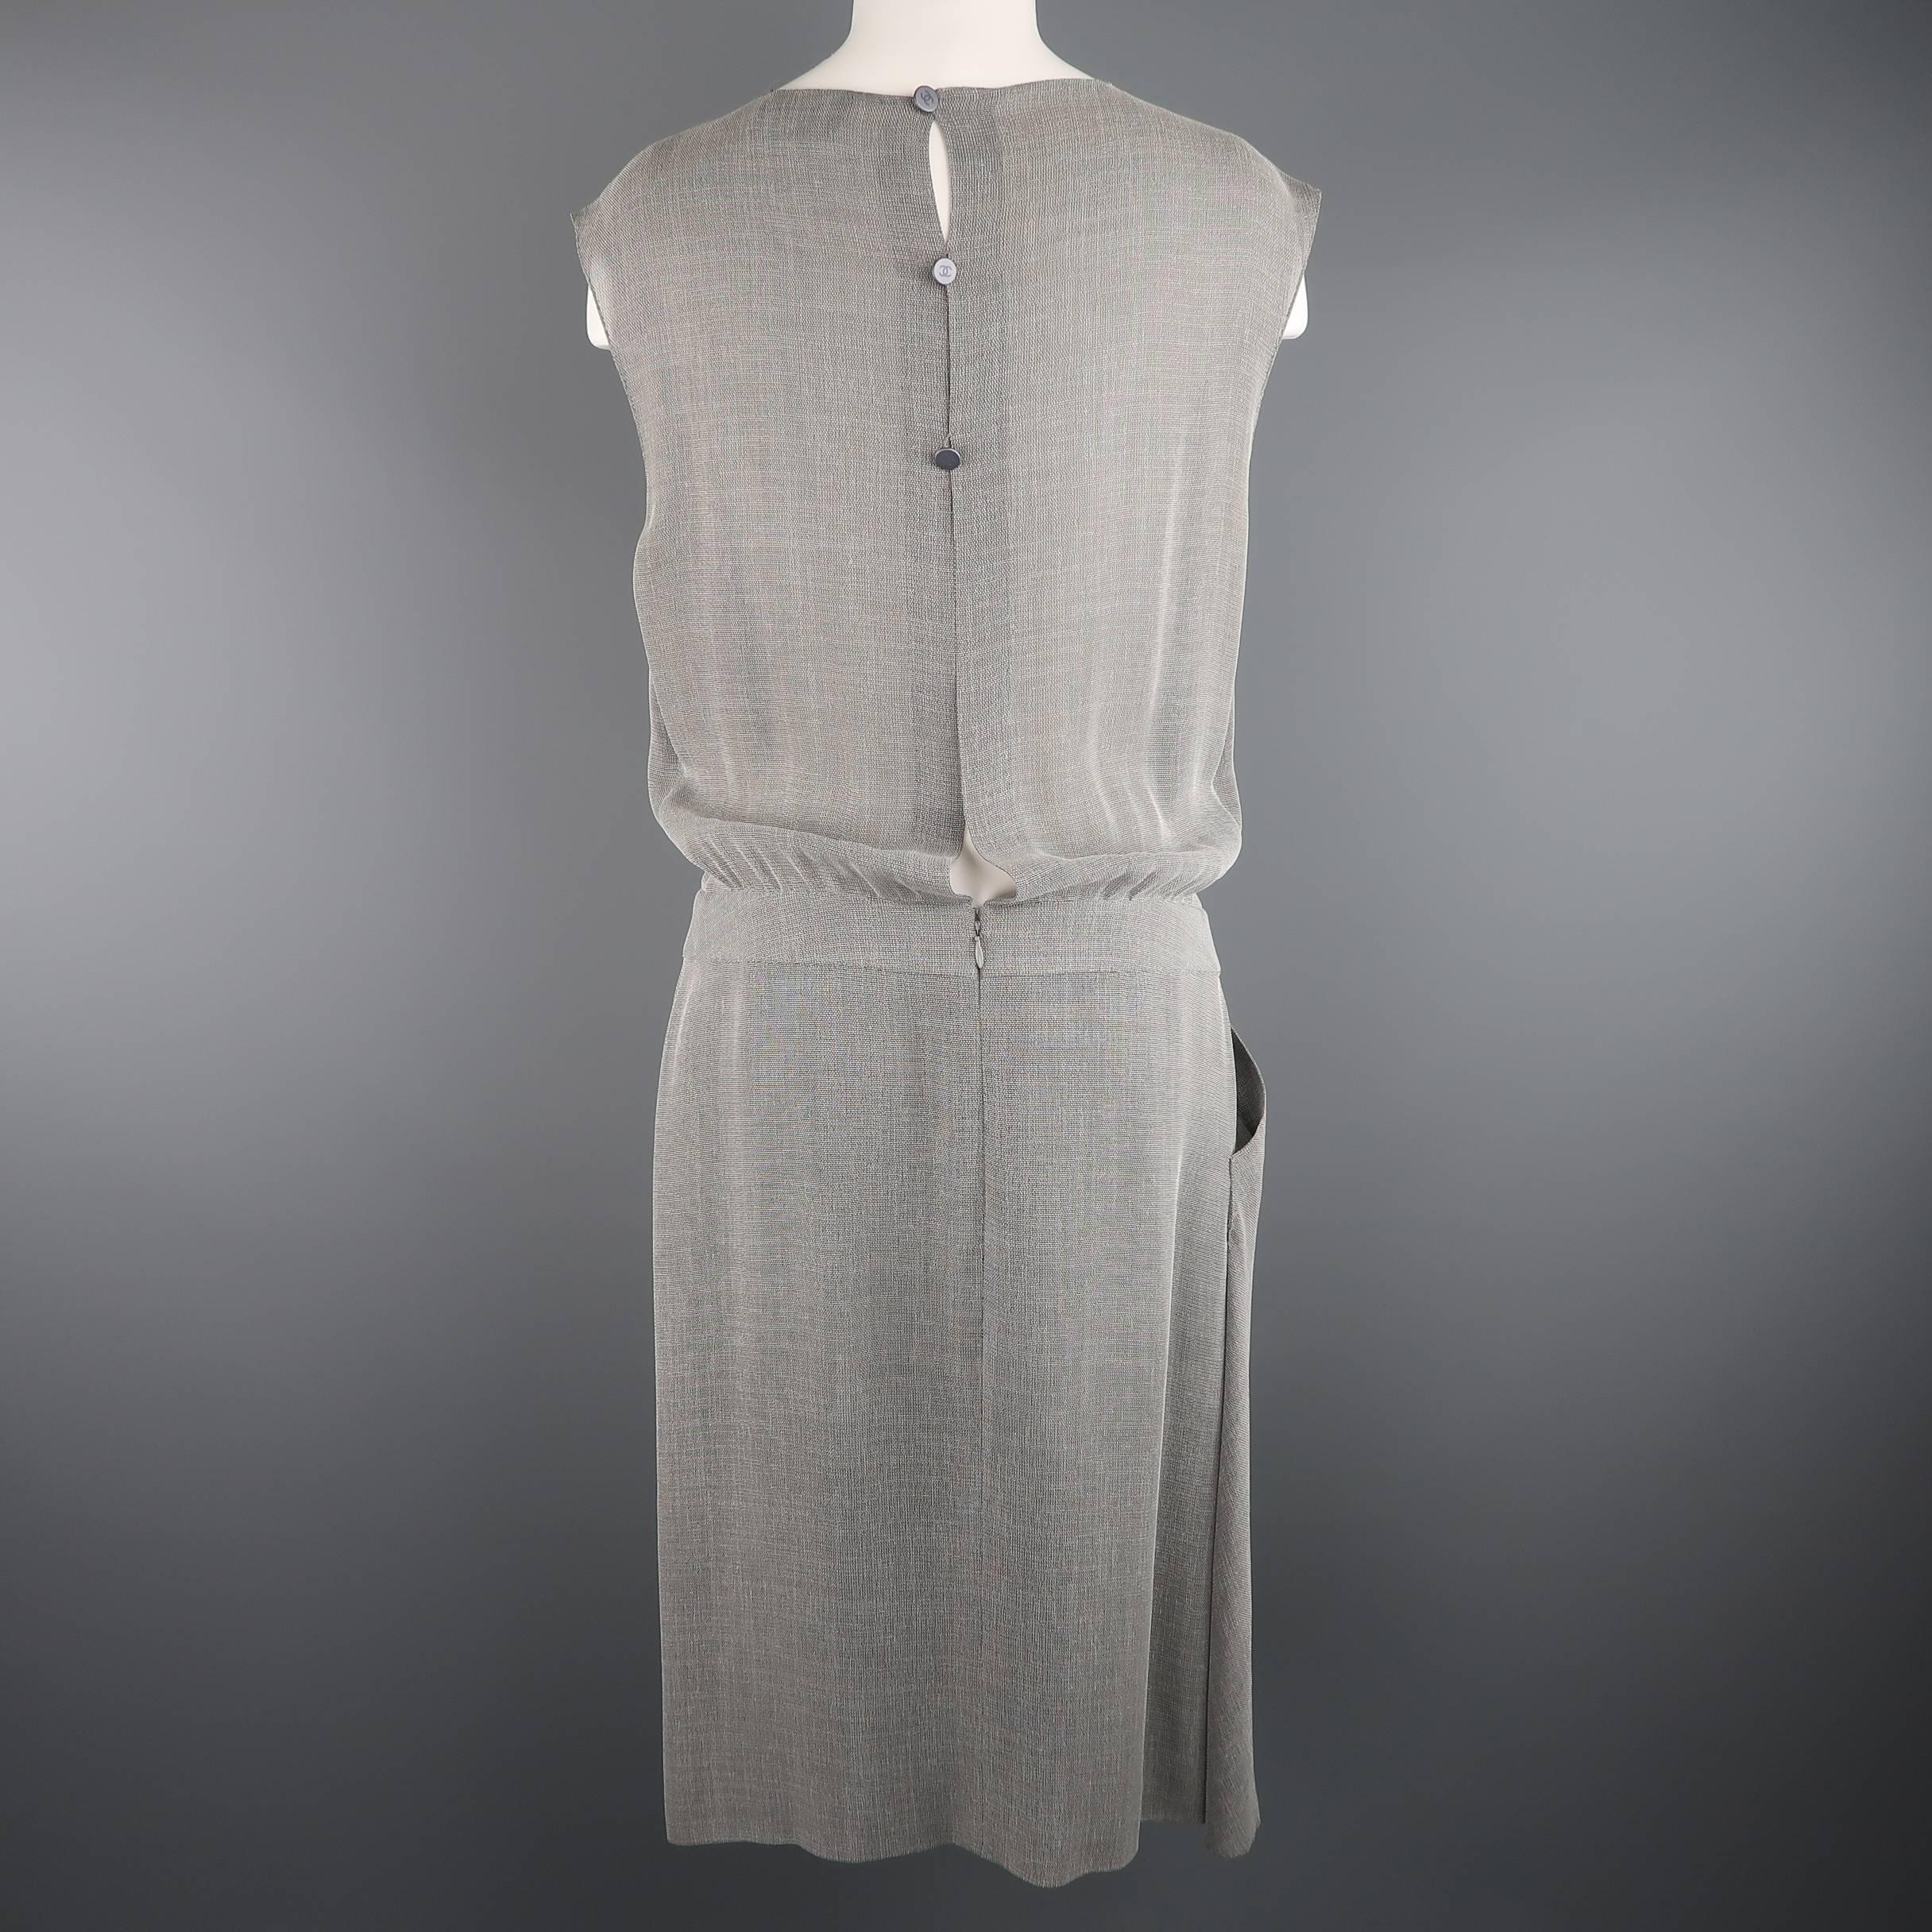 Vintage CHANEL Dress - Medium -  SS 1999 Grey Knit Drop Drape Skirt Shift Dress 1